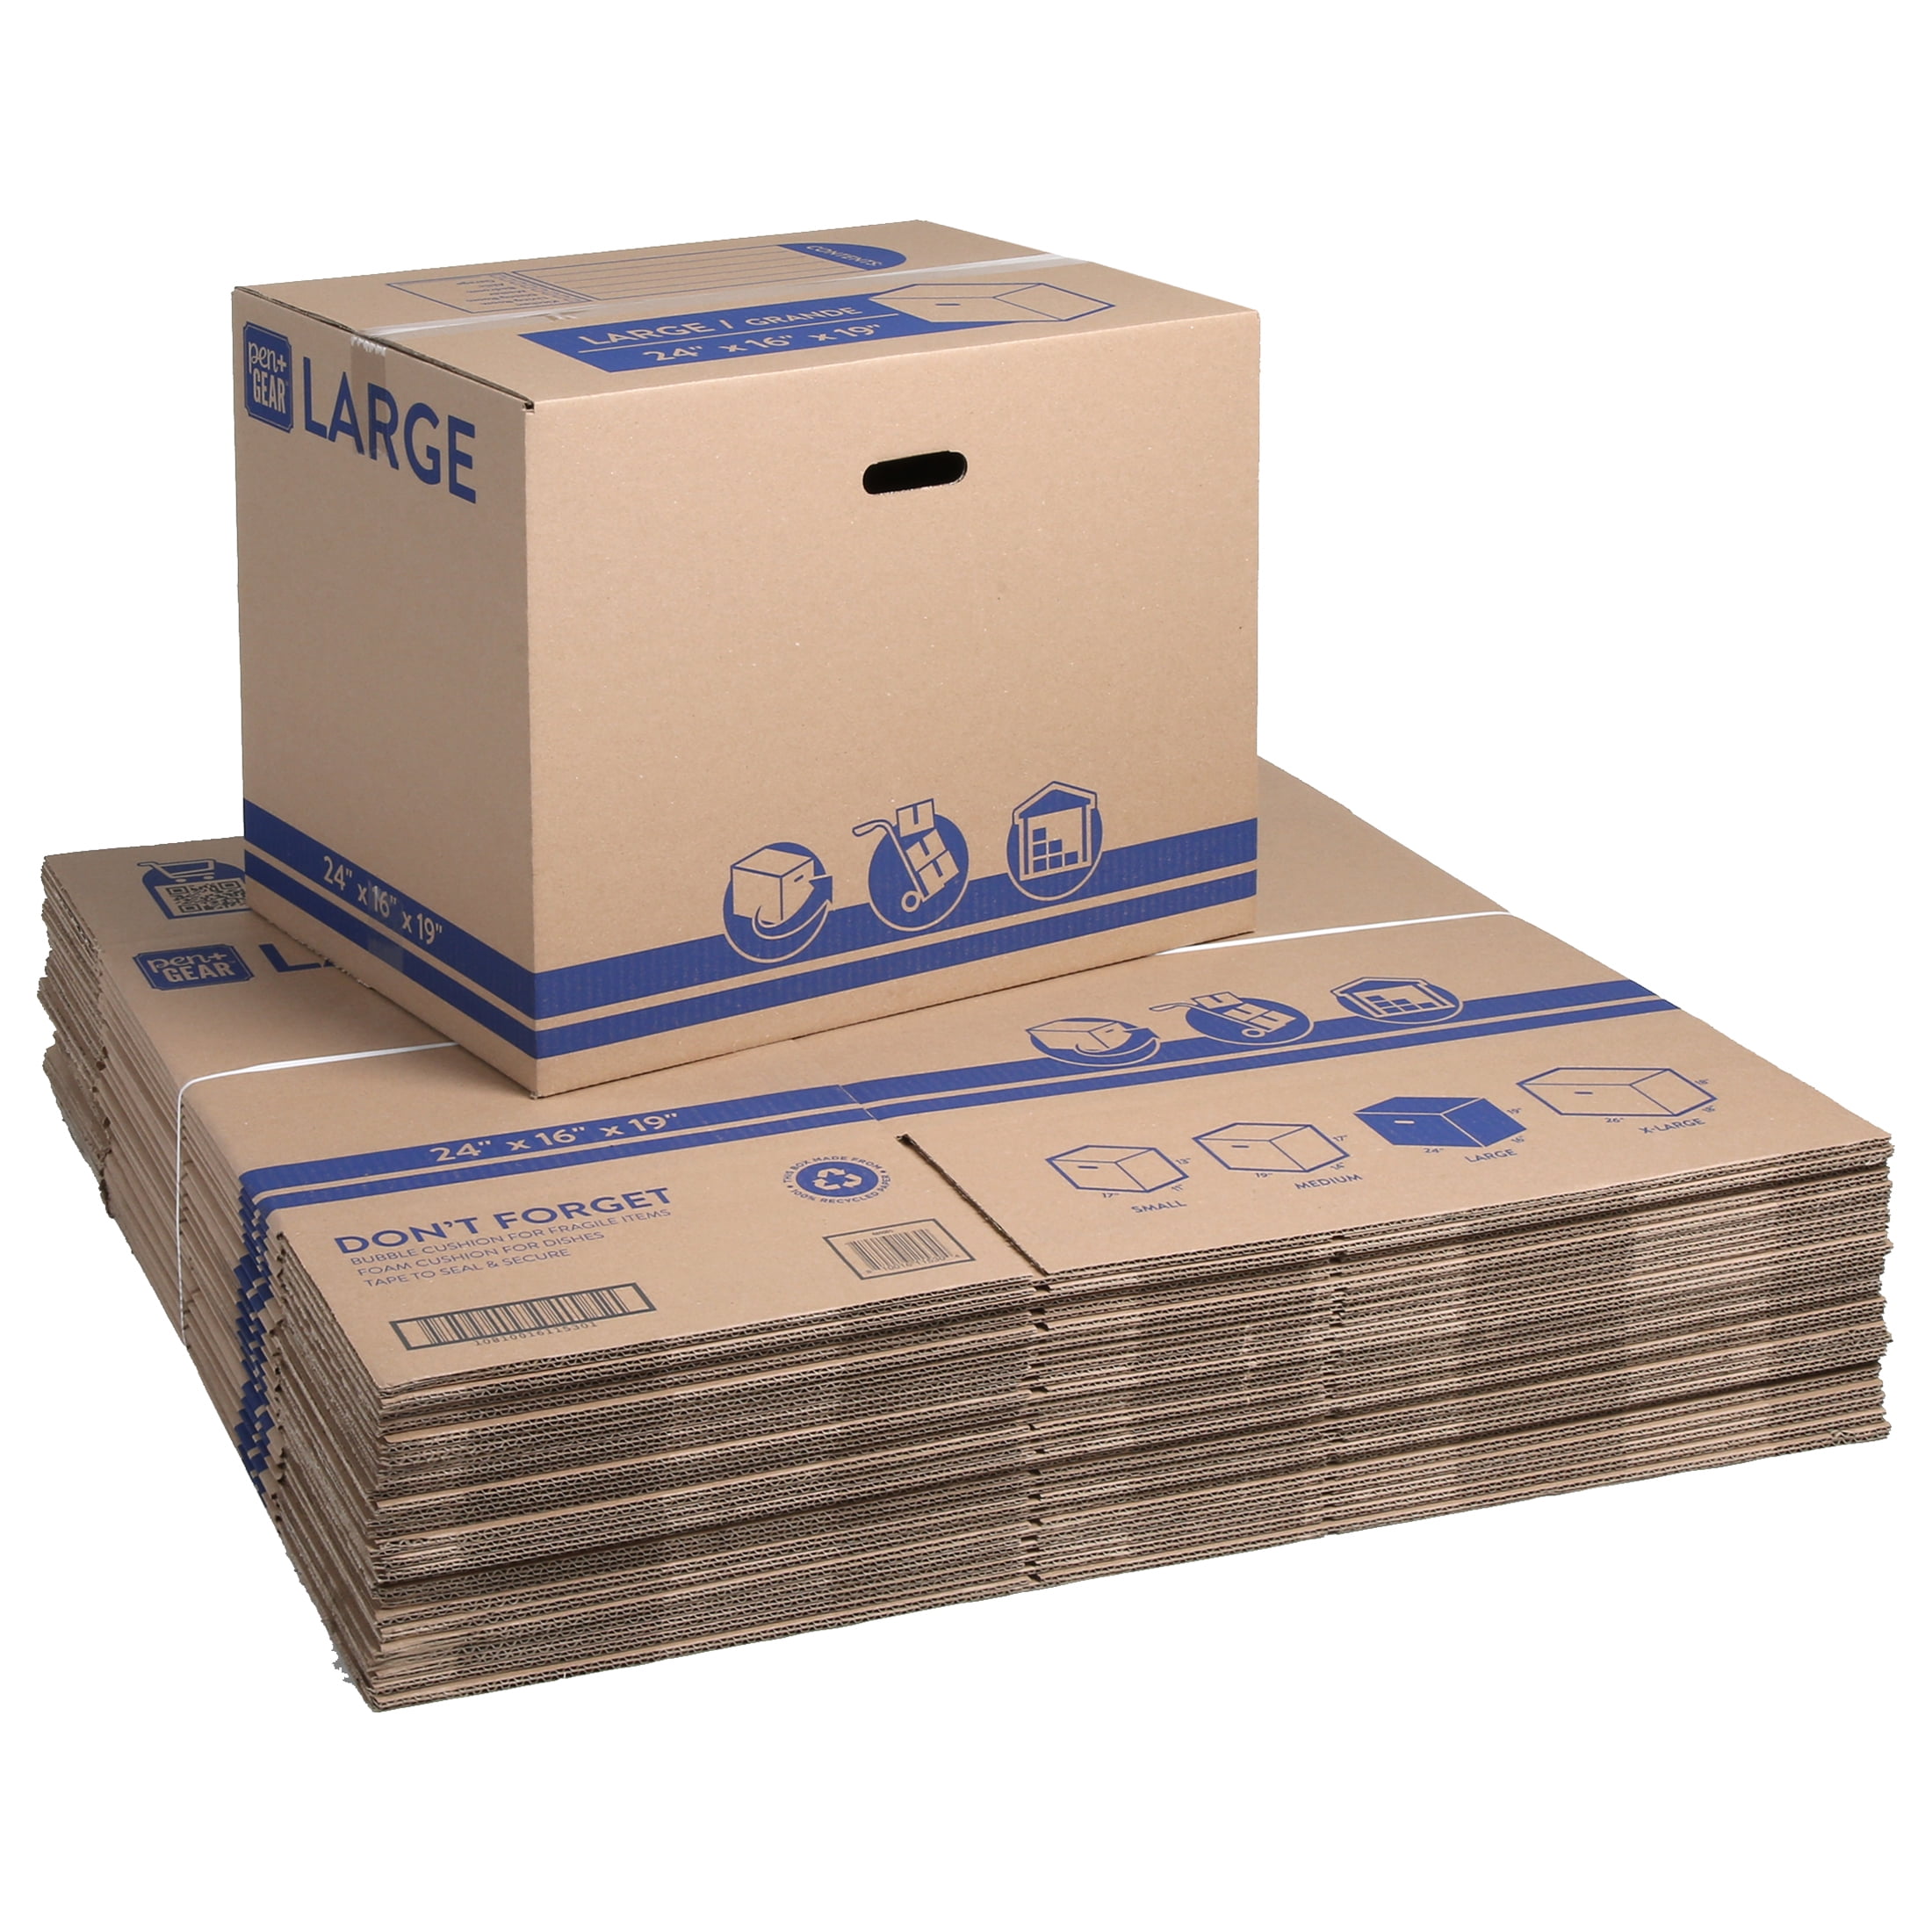 Large Moving Box 20 x 32x10x32" SINGLE WALL Cardboard Boxes 800x260x800mm 